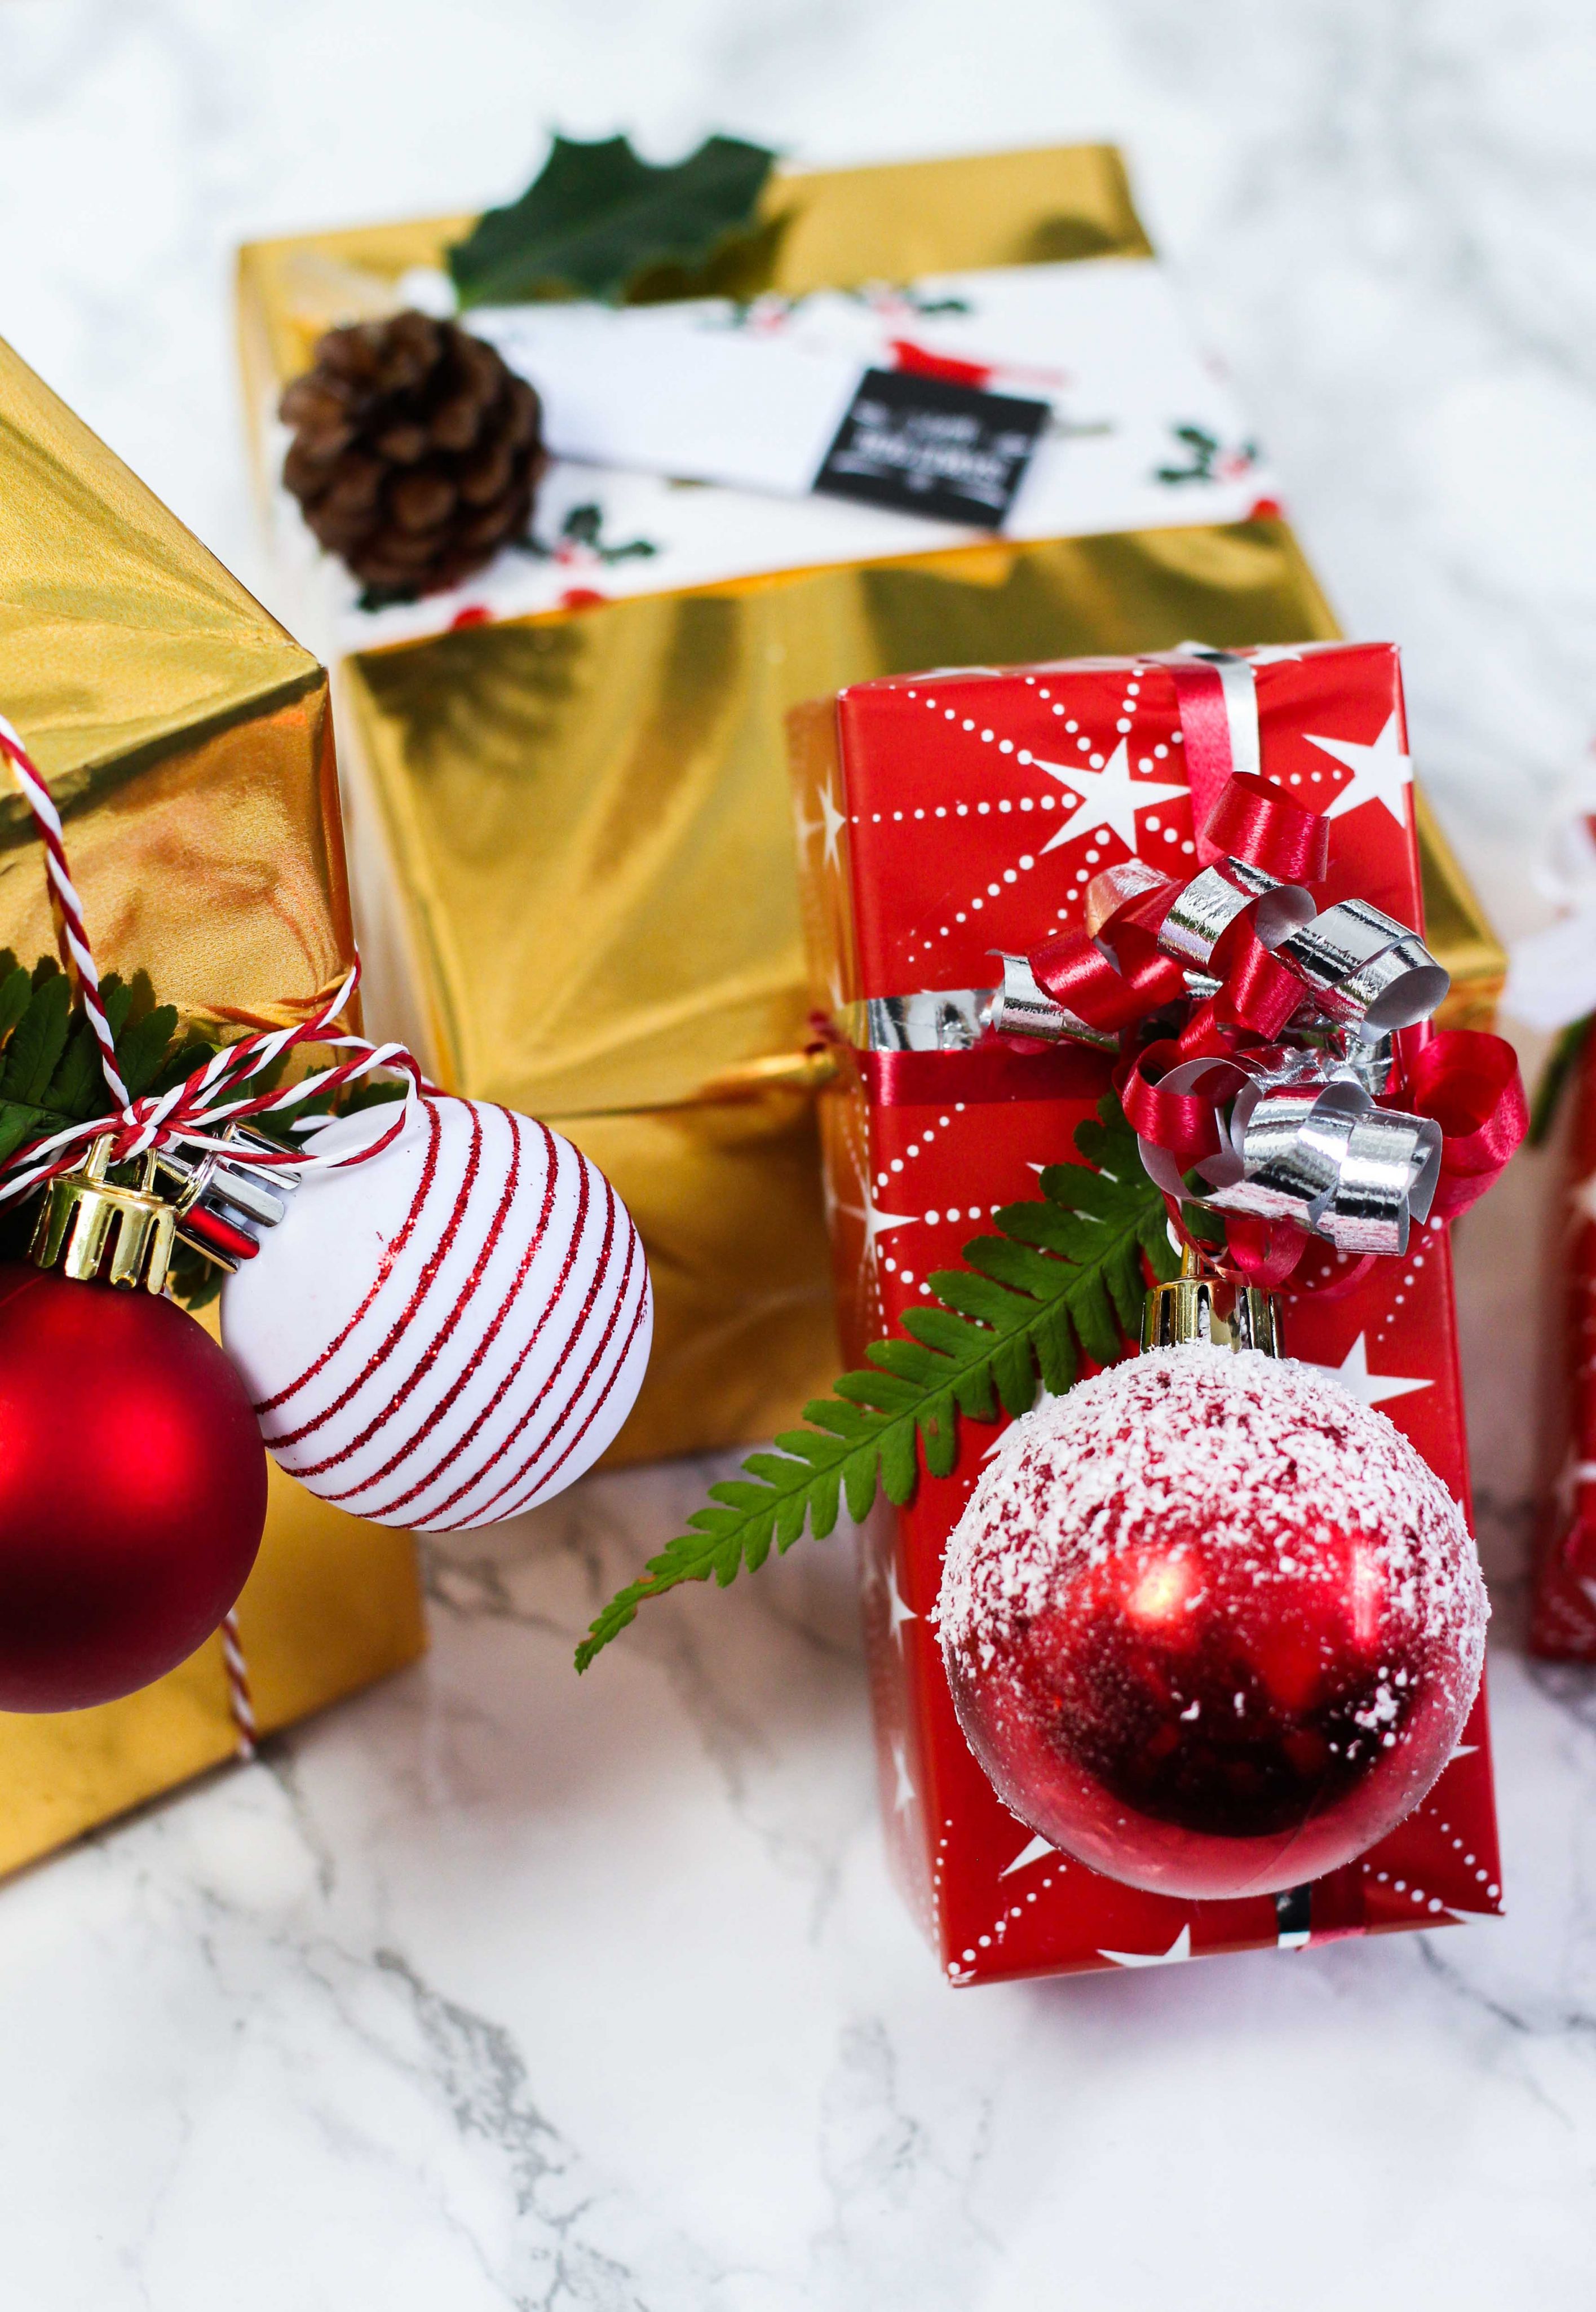 Geschenke kreativ einpacken Weihnachten Kreativer Christmas Gift Wrapping Guide Clas Ohlson Geschenkpapier Geschenk Ideen Dekoration DIY Weihnachtskugeln